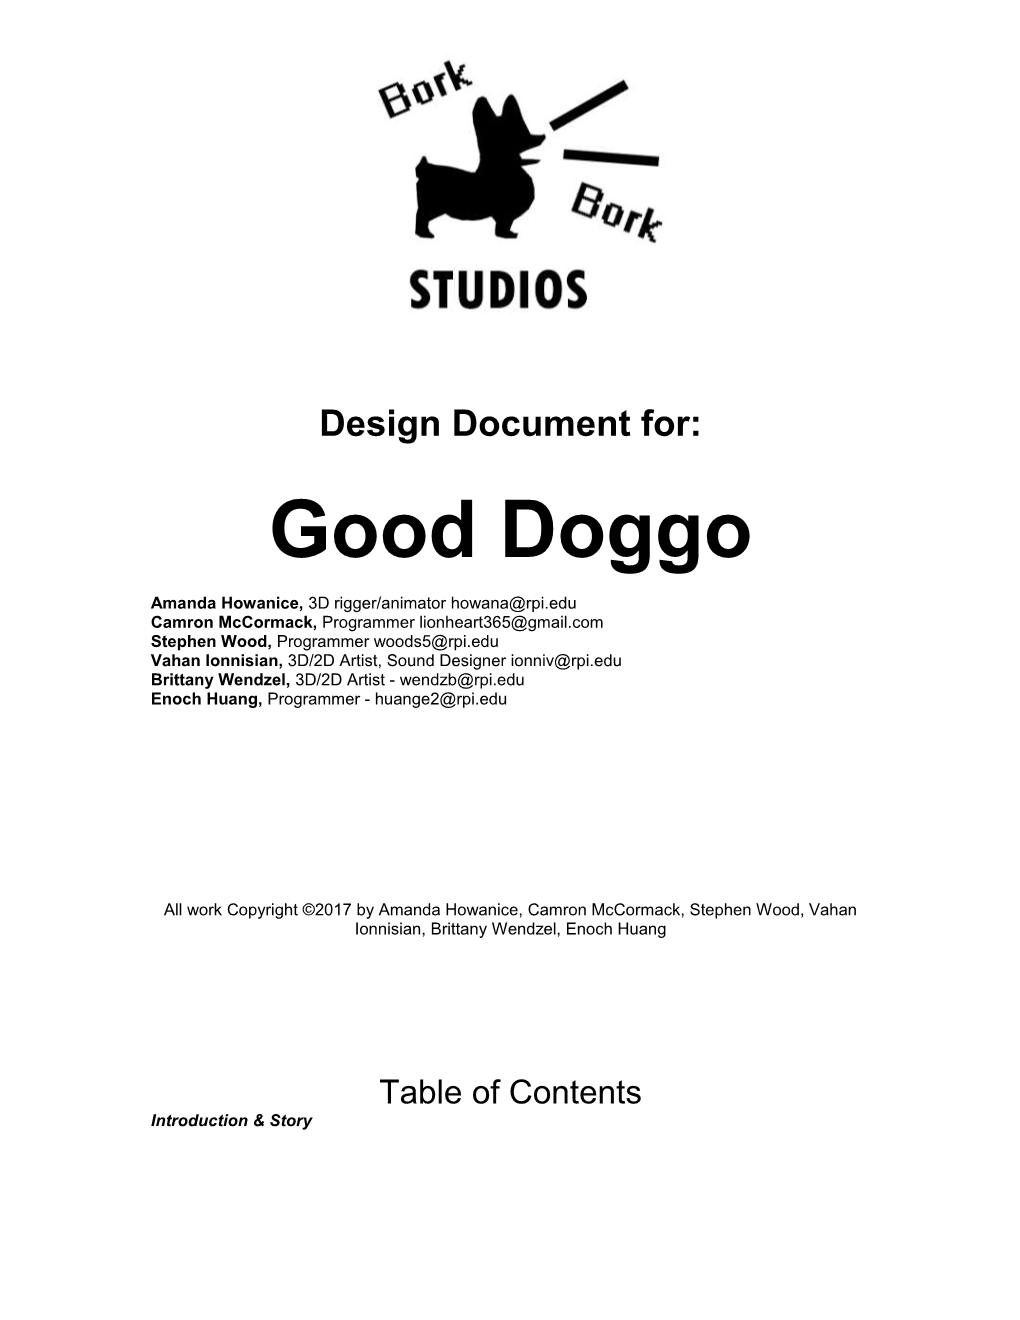 Design Document For